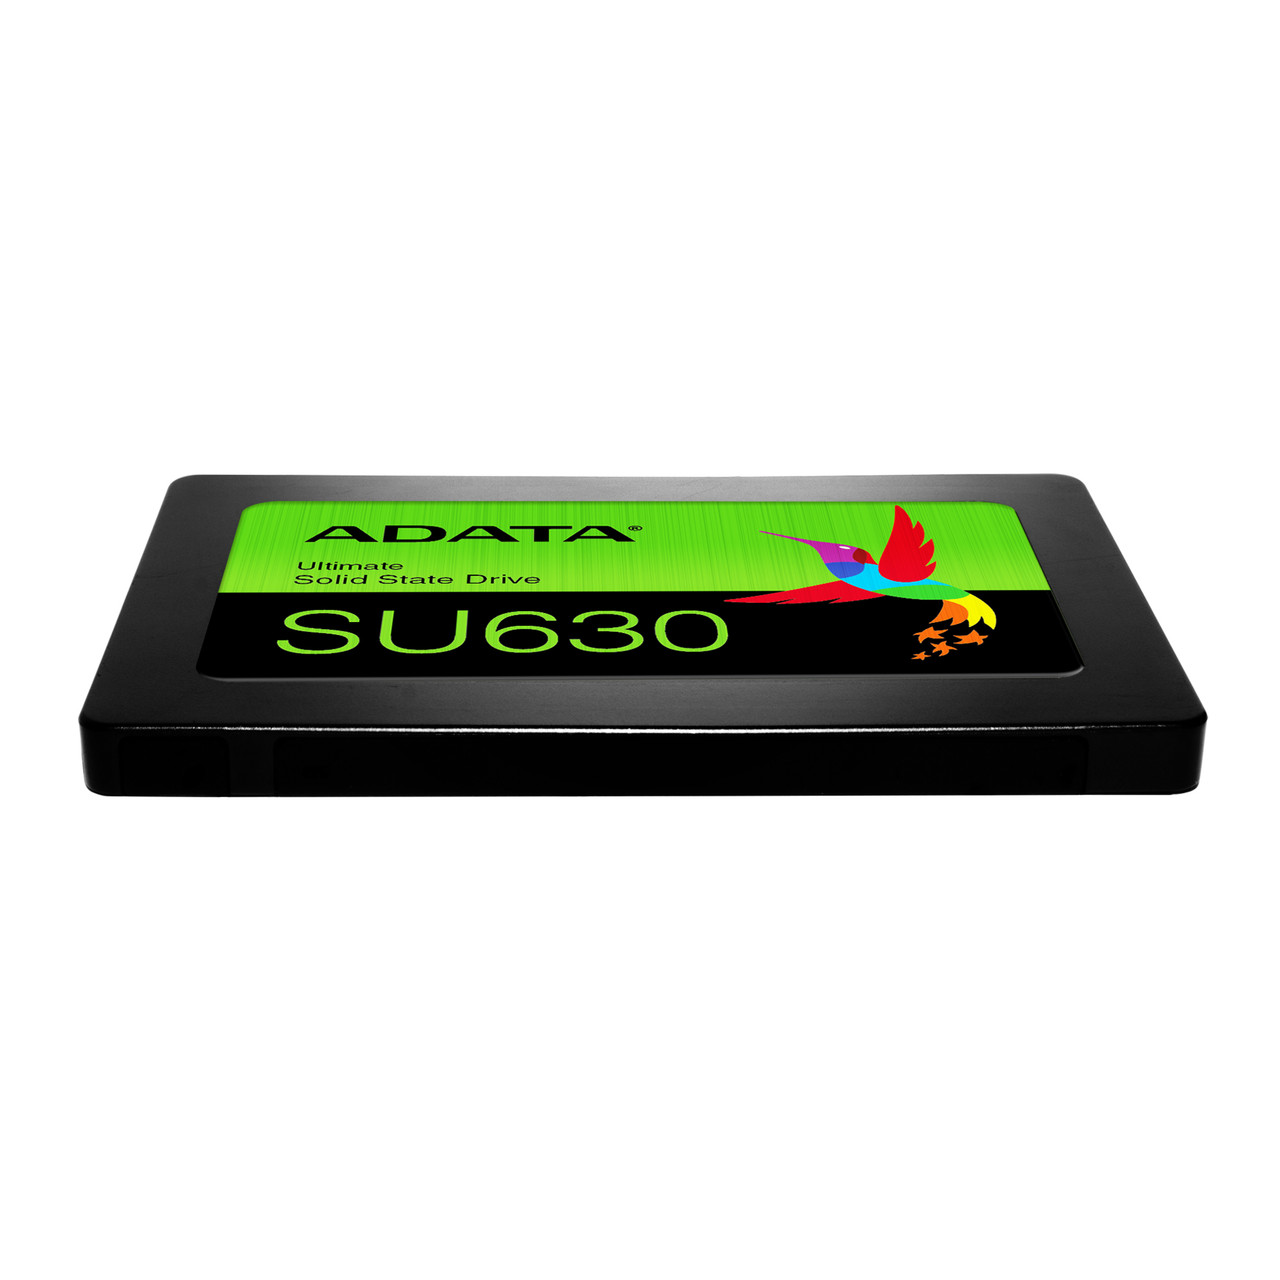 ADATA Ultimate Series: SU630 1.92TB SATA III - 2.5" Internal Solid State  Drive | 3D QLC - Black/Green SSD | Up to 520MBps - 1PK - ADATA